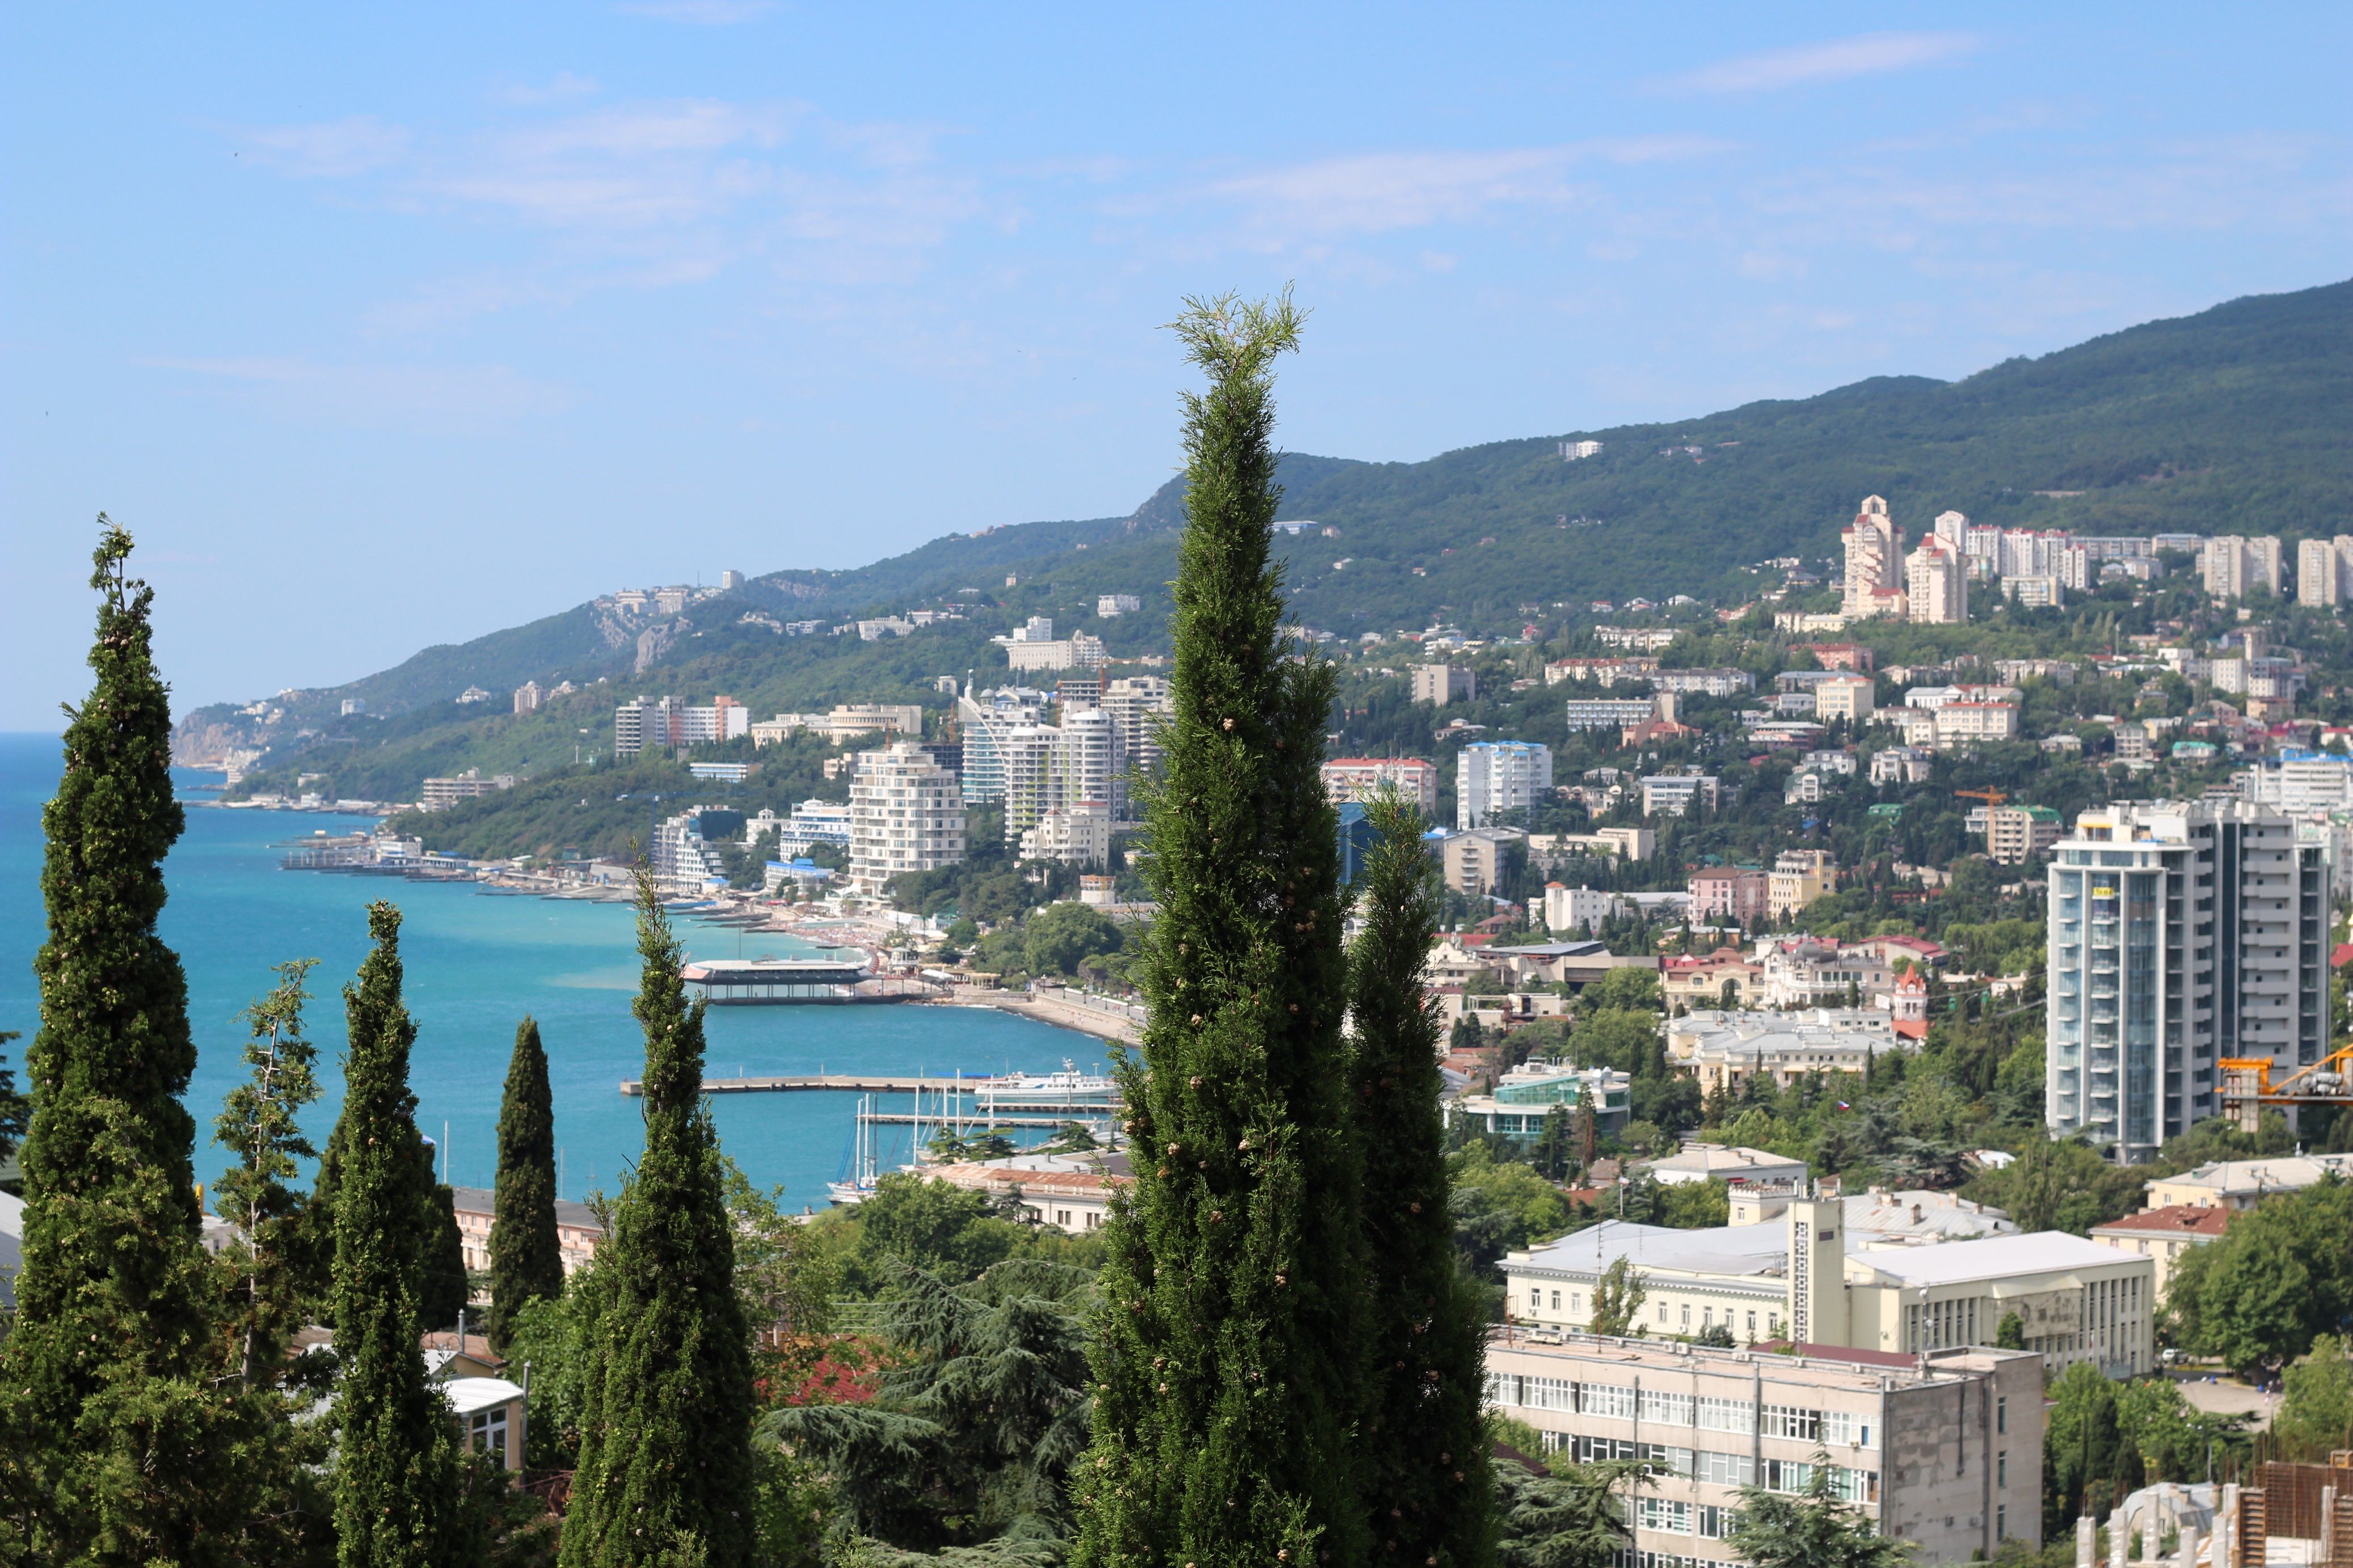 La ville de Yalta